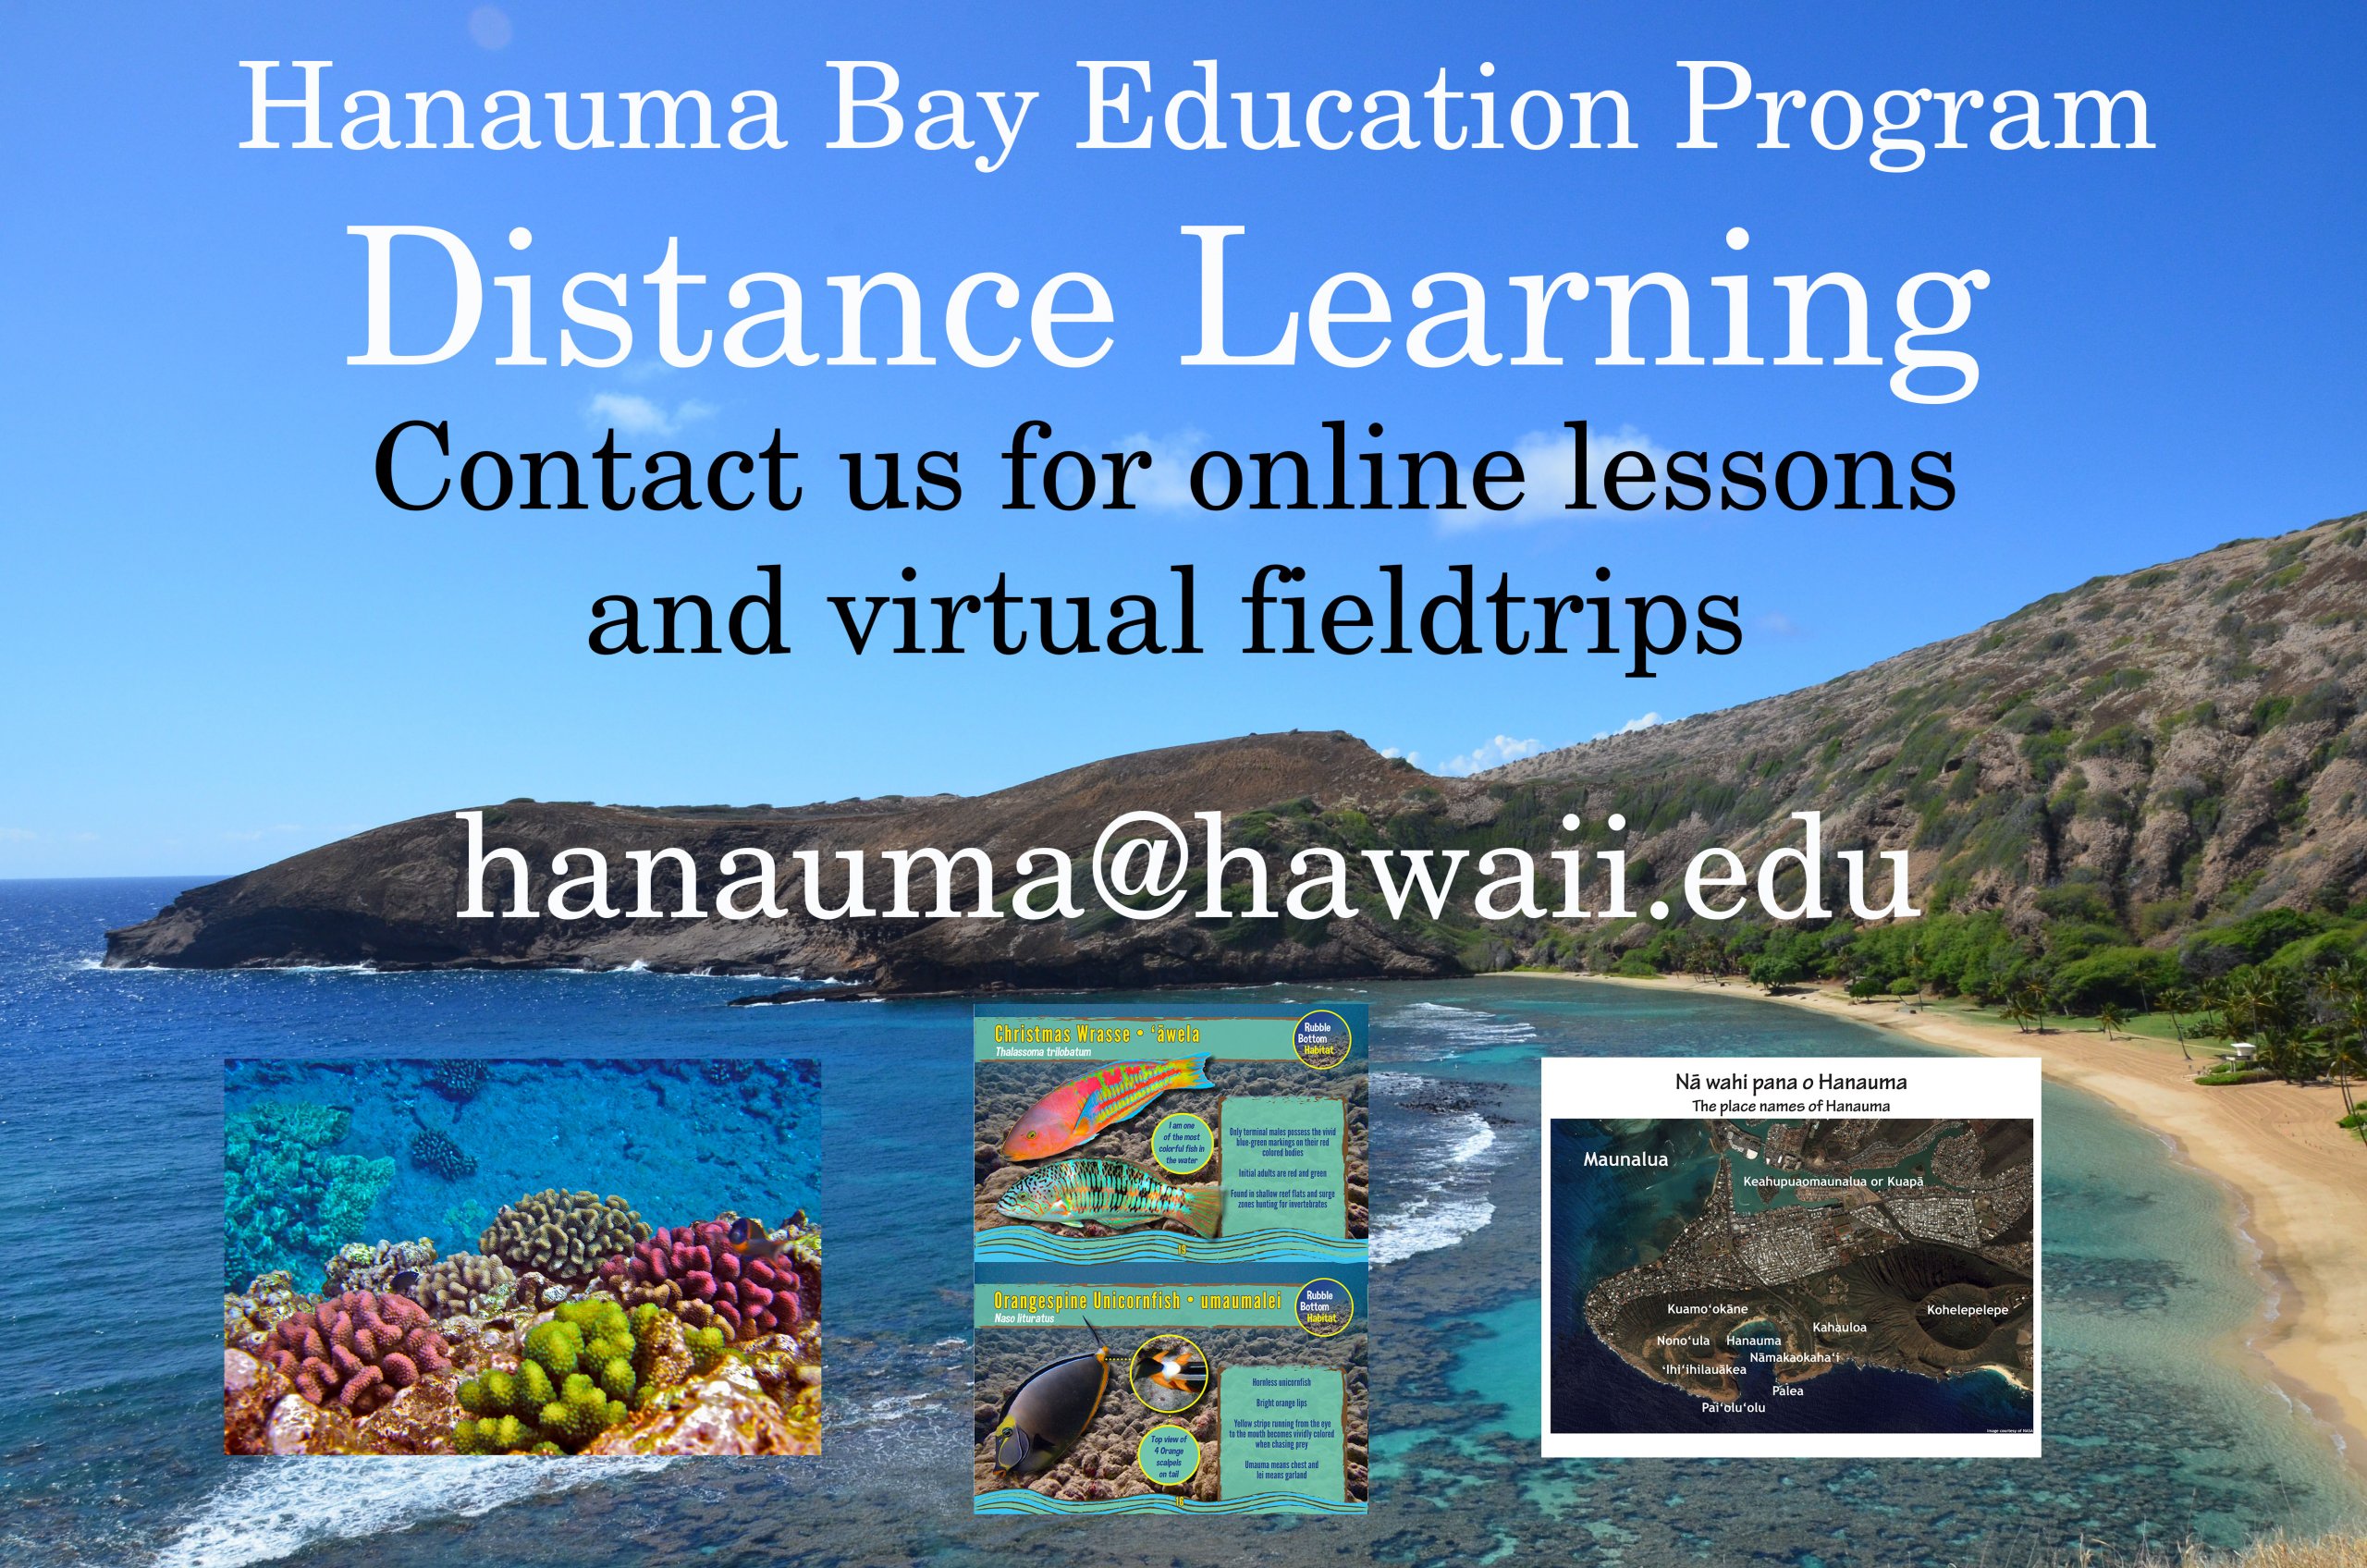 Contact us for online lessons and virtual fieldtrips hanauma@hawaii.edu. Image contains Hanauma Bay ocean, sand, mountains, coral, fish, map of hanauma